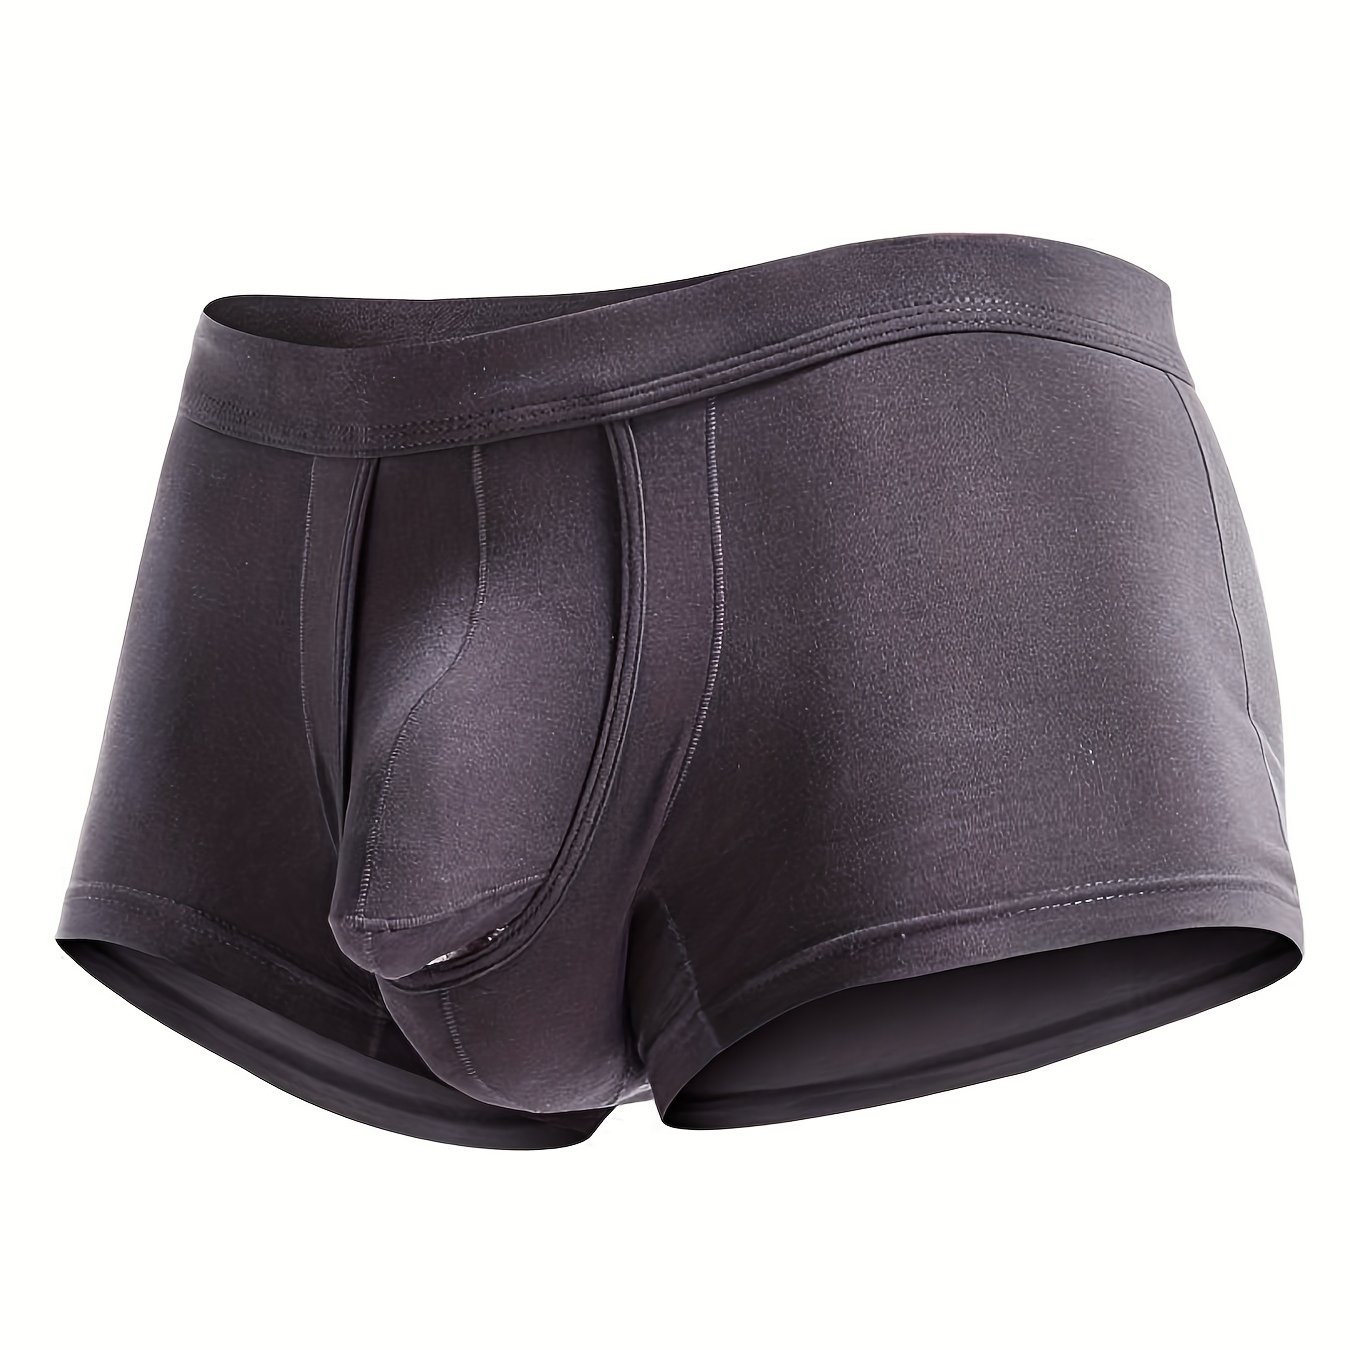 Men's Breathe Underwear Separation Underpants Bonds, 50% OFF